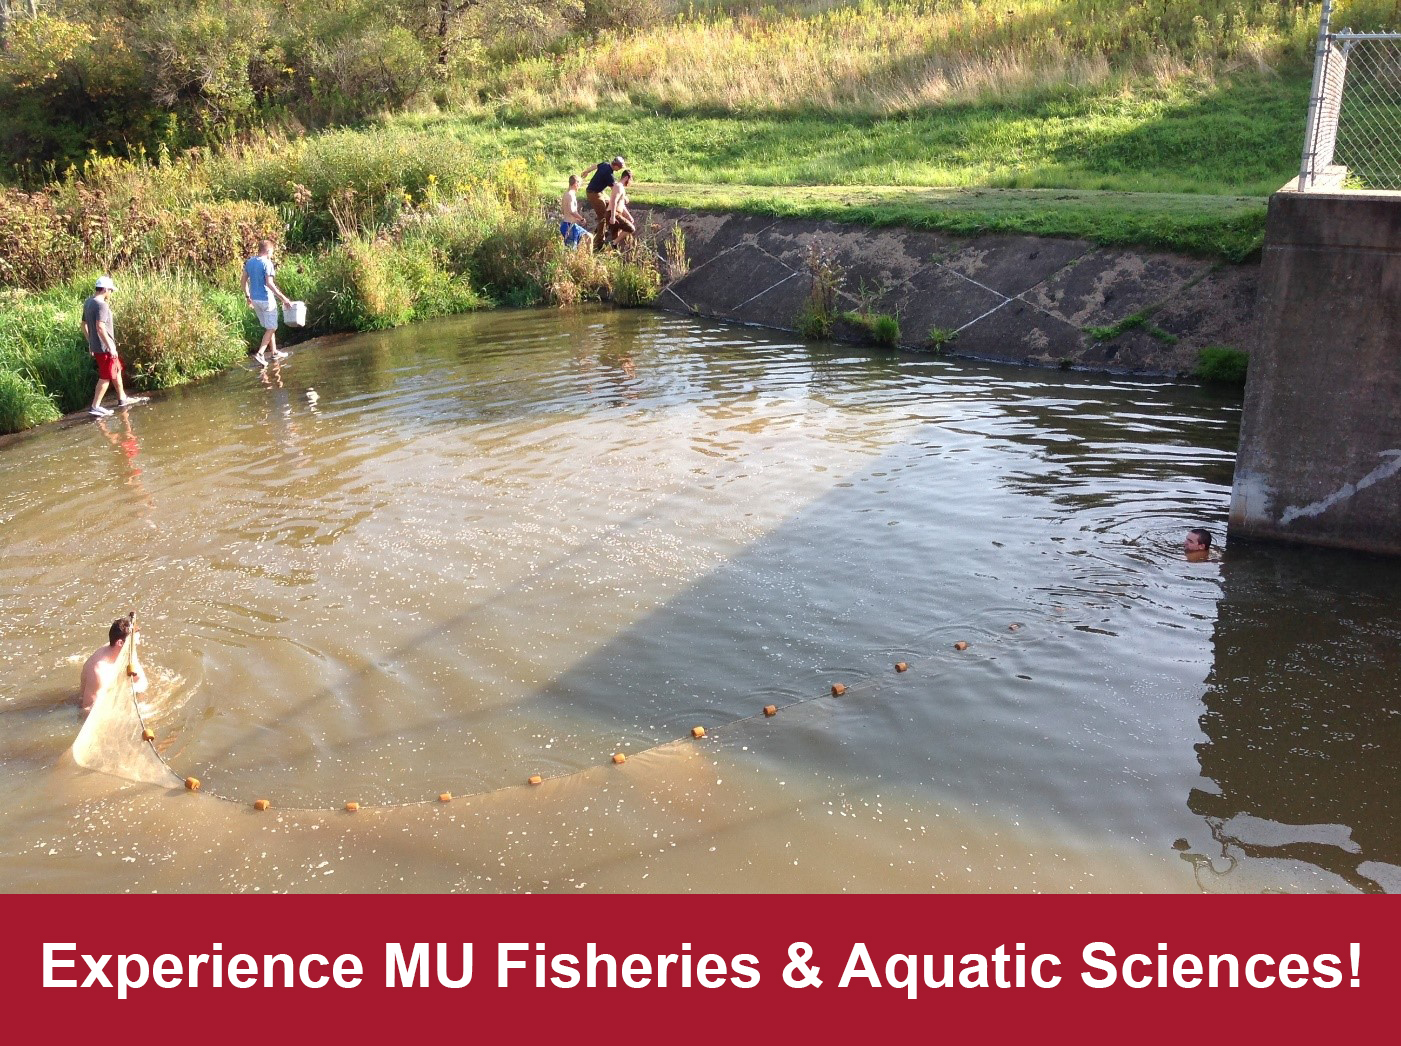 Experience the MU Fisheries & Aquatic Sciences